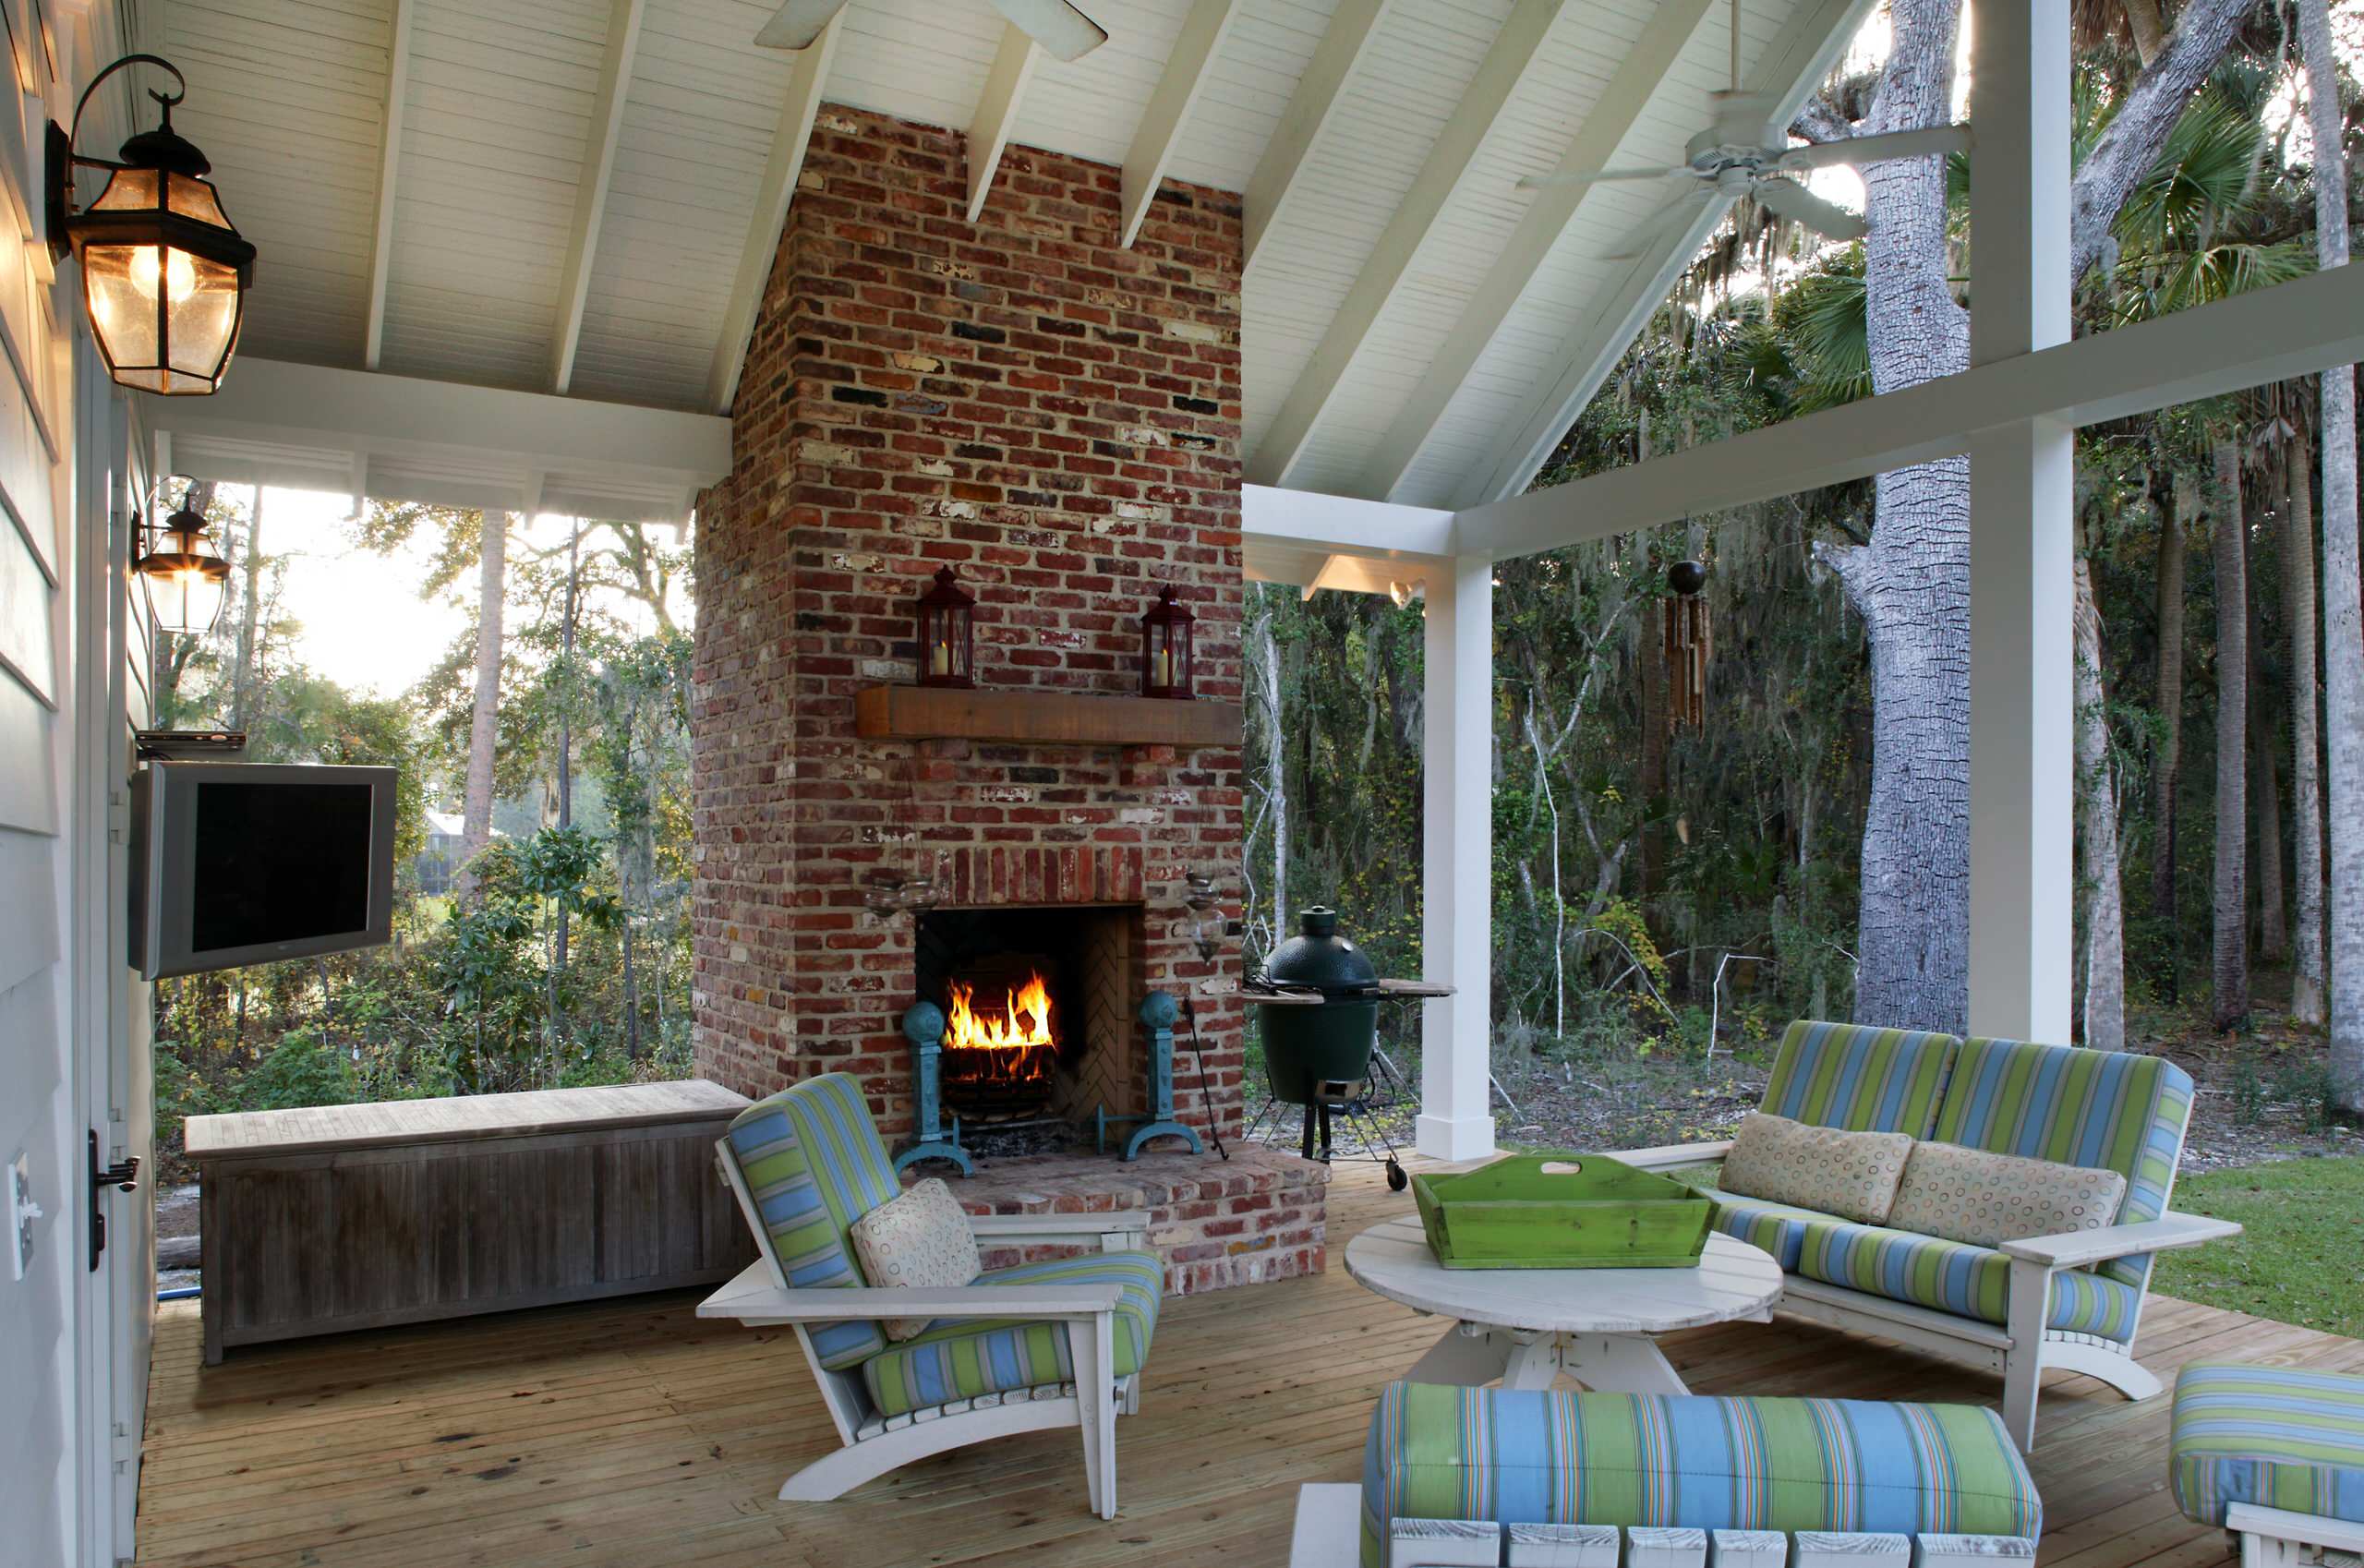 Outdoor Brick Fireplace - Photos & Ideas | Houzz